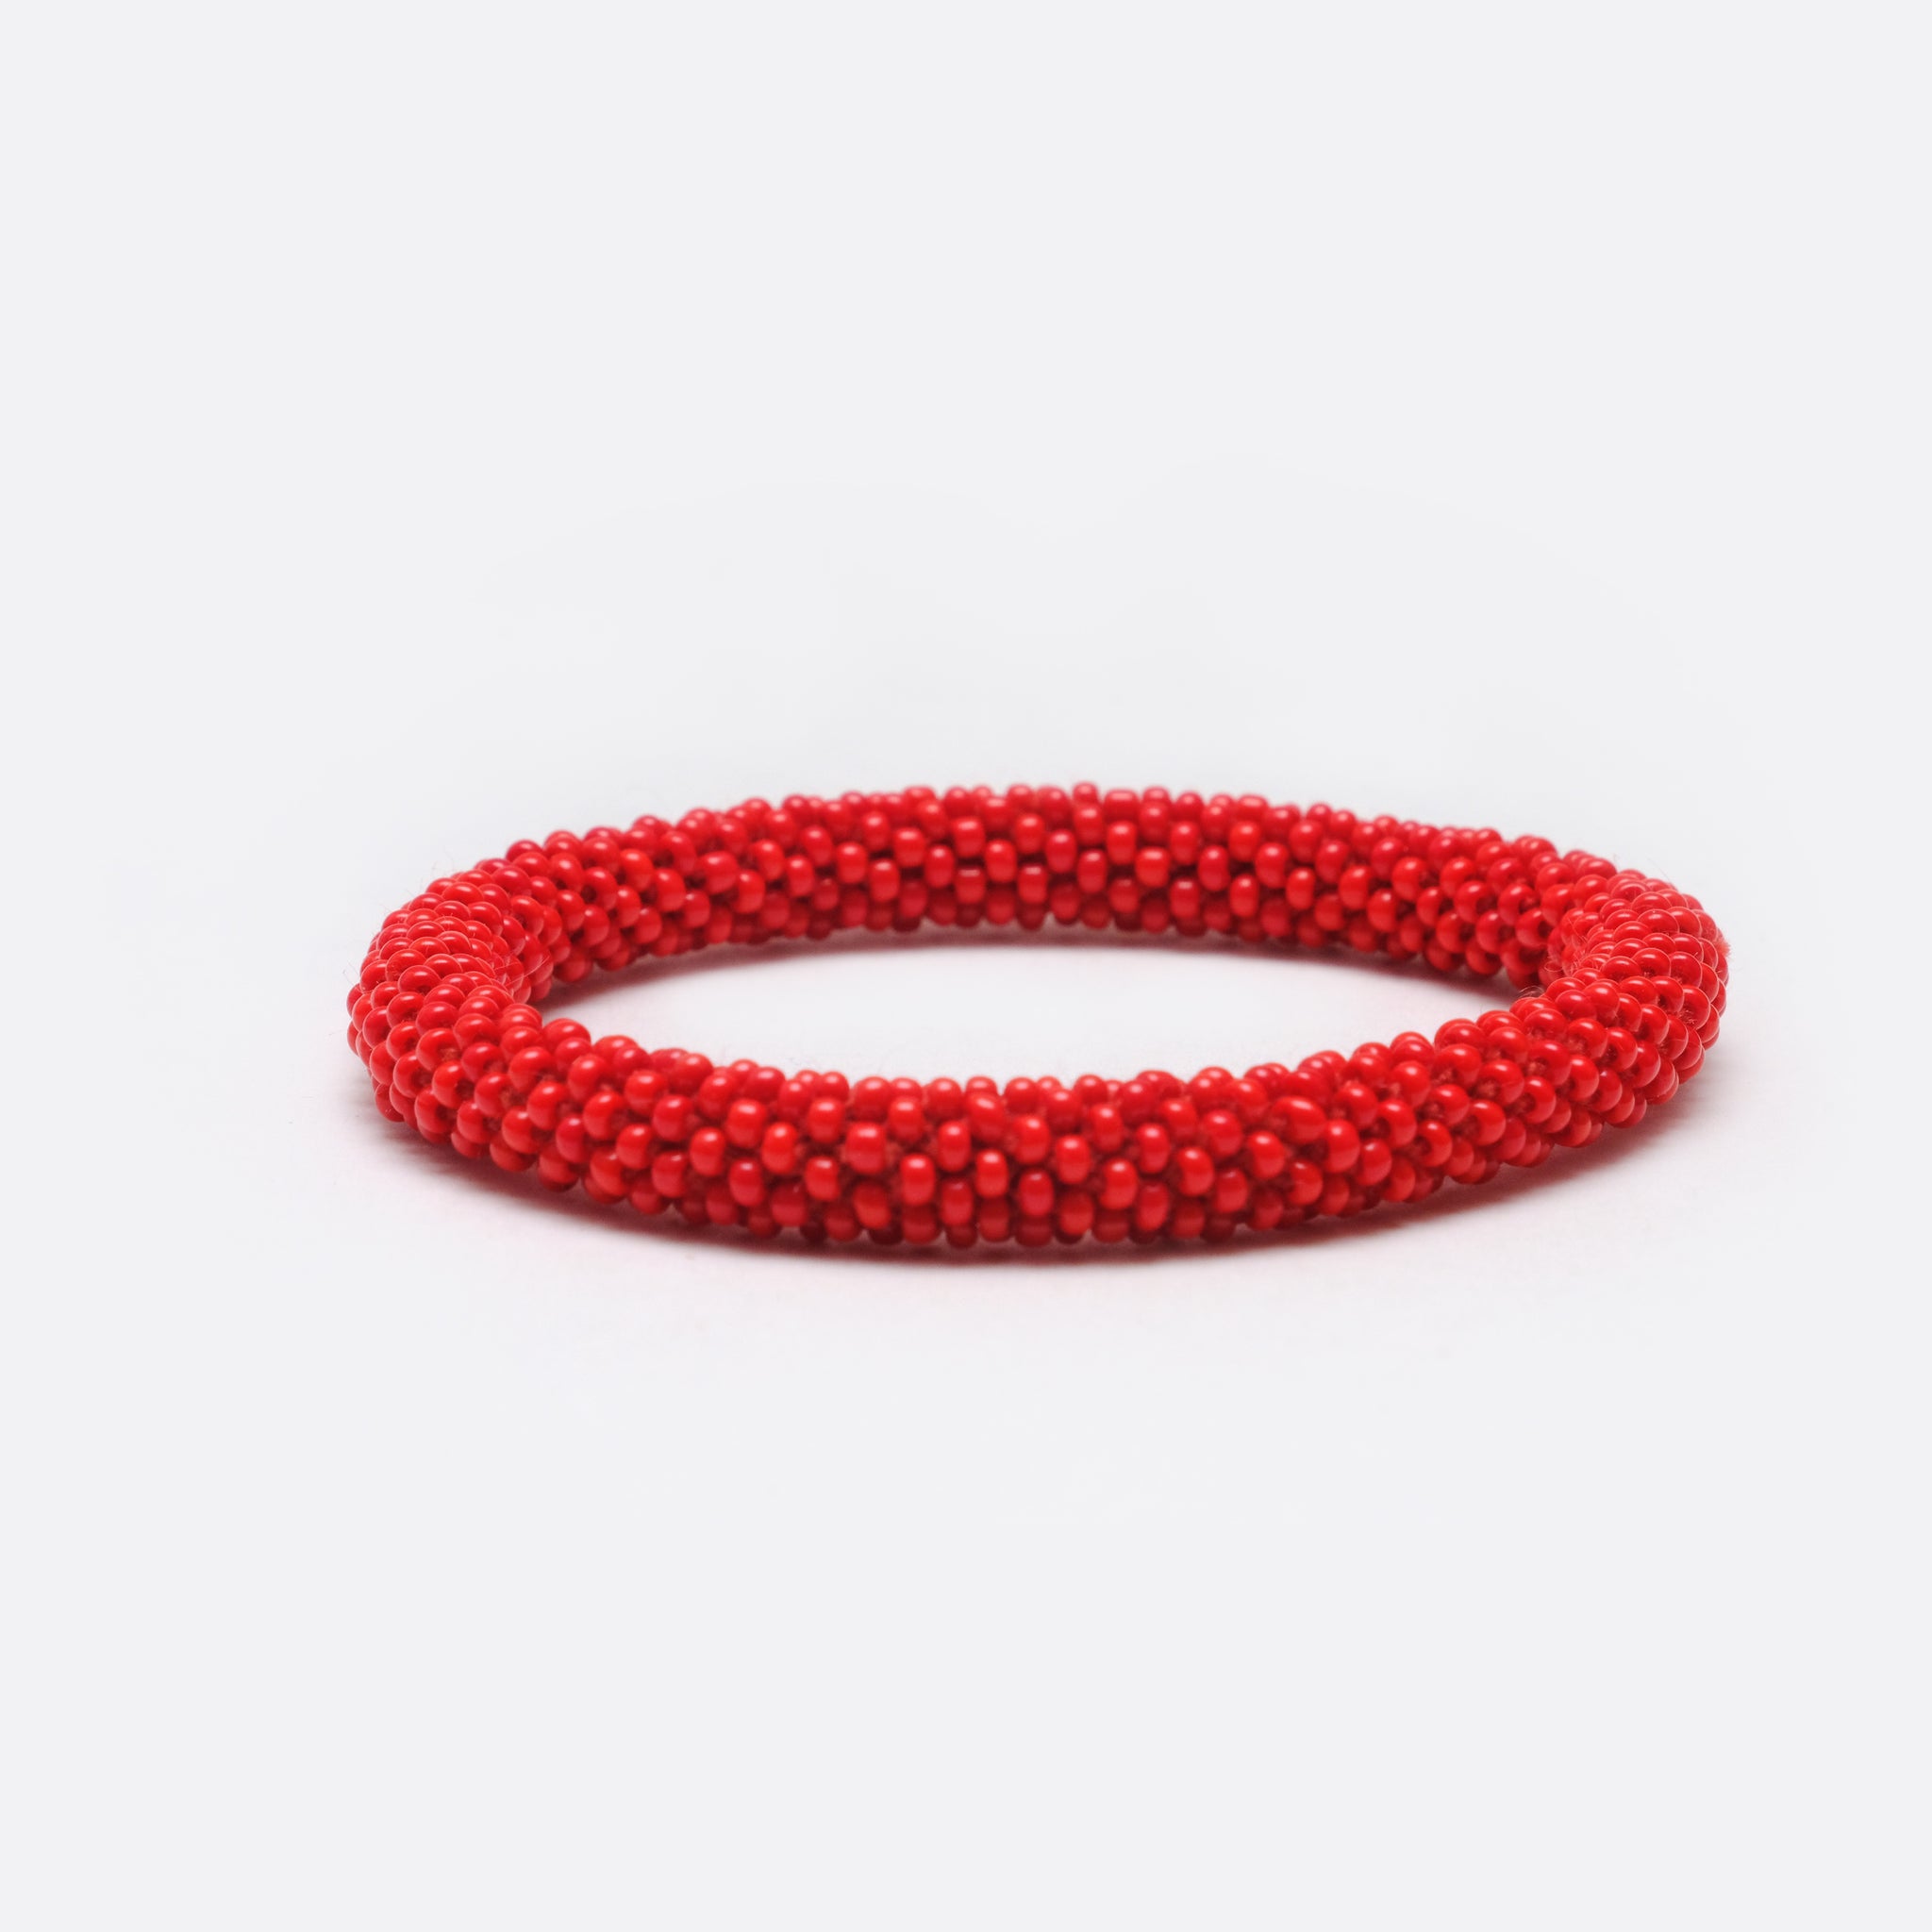 Beaded Bracelet - A Red